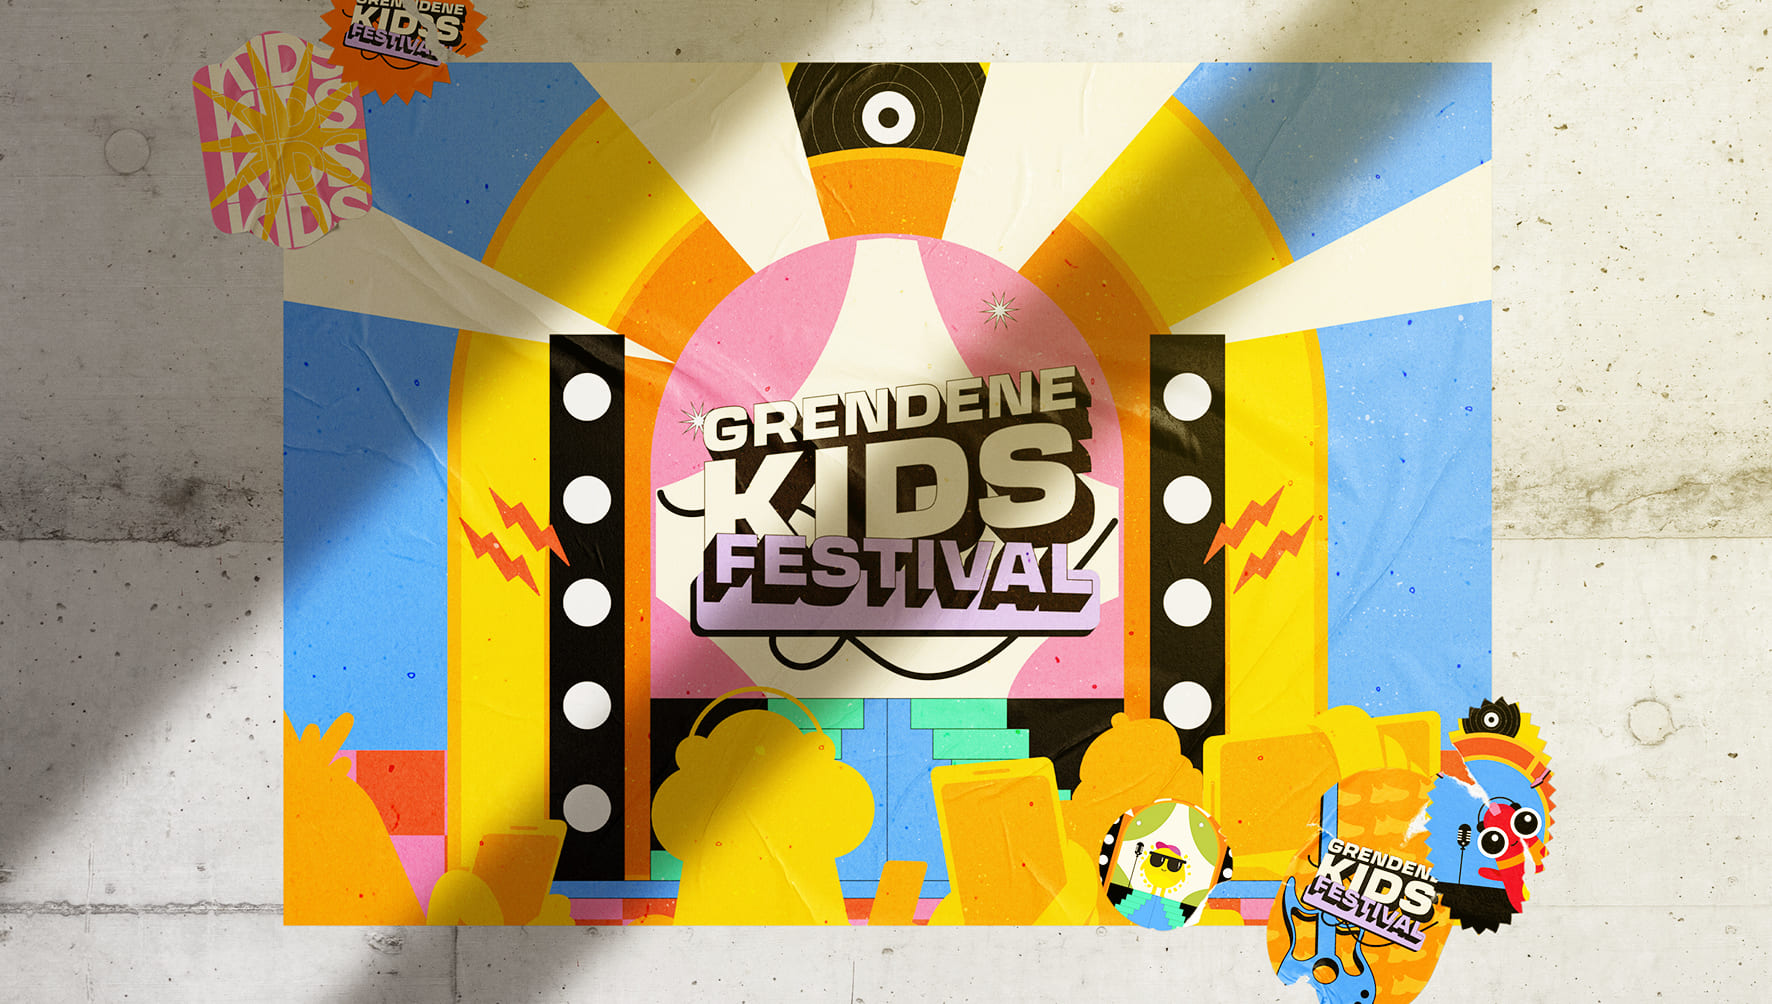 Grendene Kids Festival, a Vibrant Celebration of Brands and Business by Bigode Design